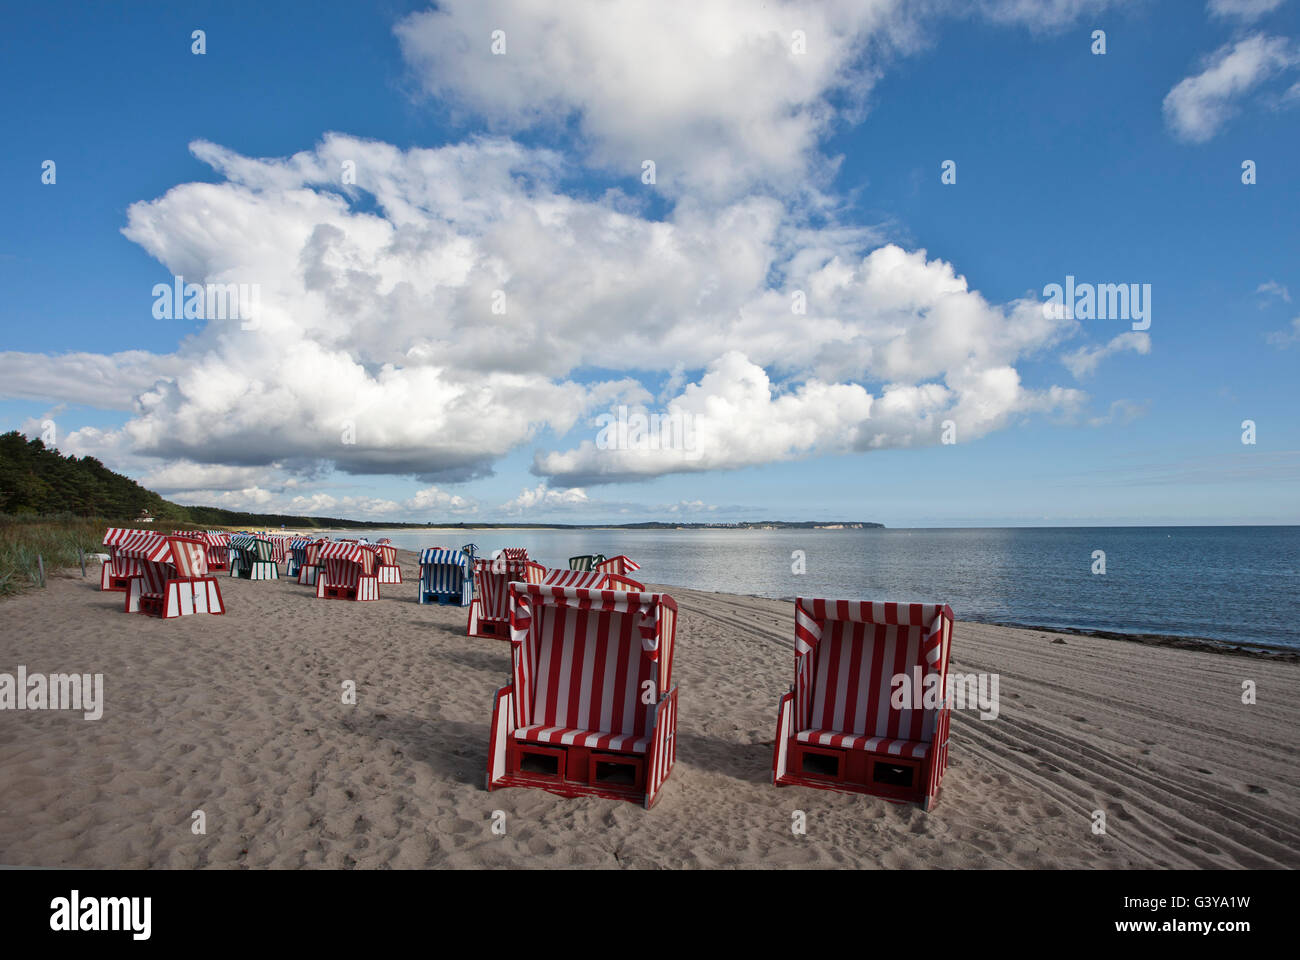 Spiaggia di Thiessow, Moenchgut penisola, Ruegen Island o Rugia Isola, Meclemburgo-Pomerania Occidentale Foto Stock